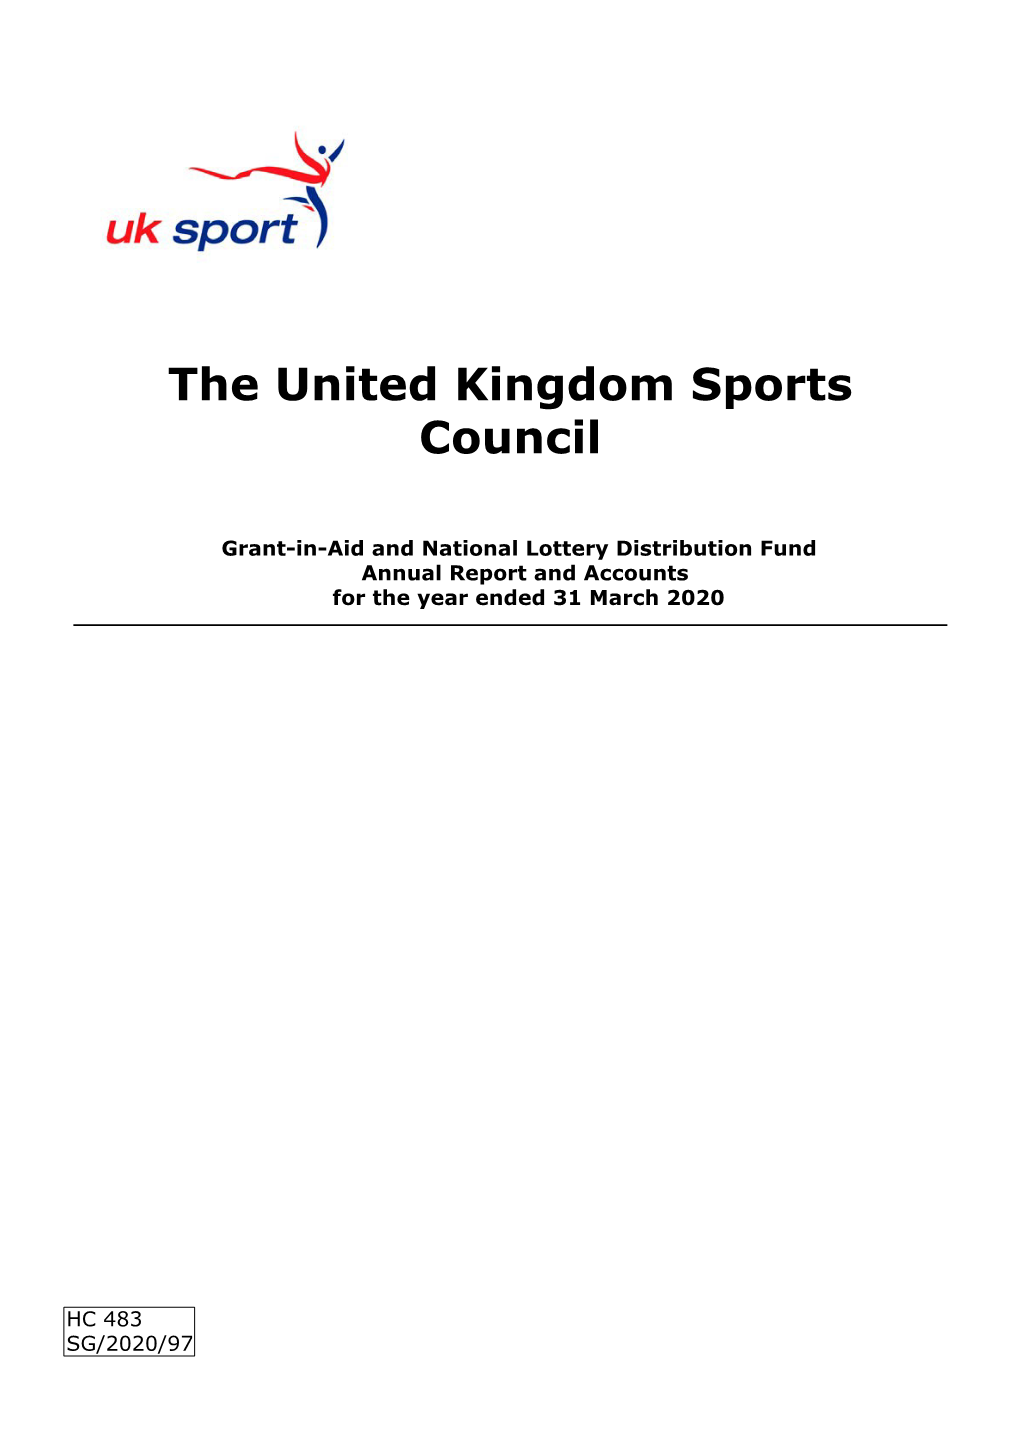 The United Kingdom Sports Council